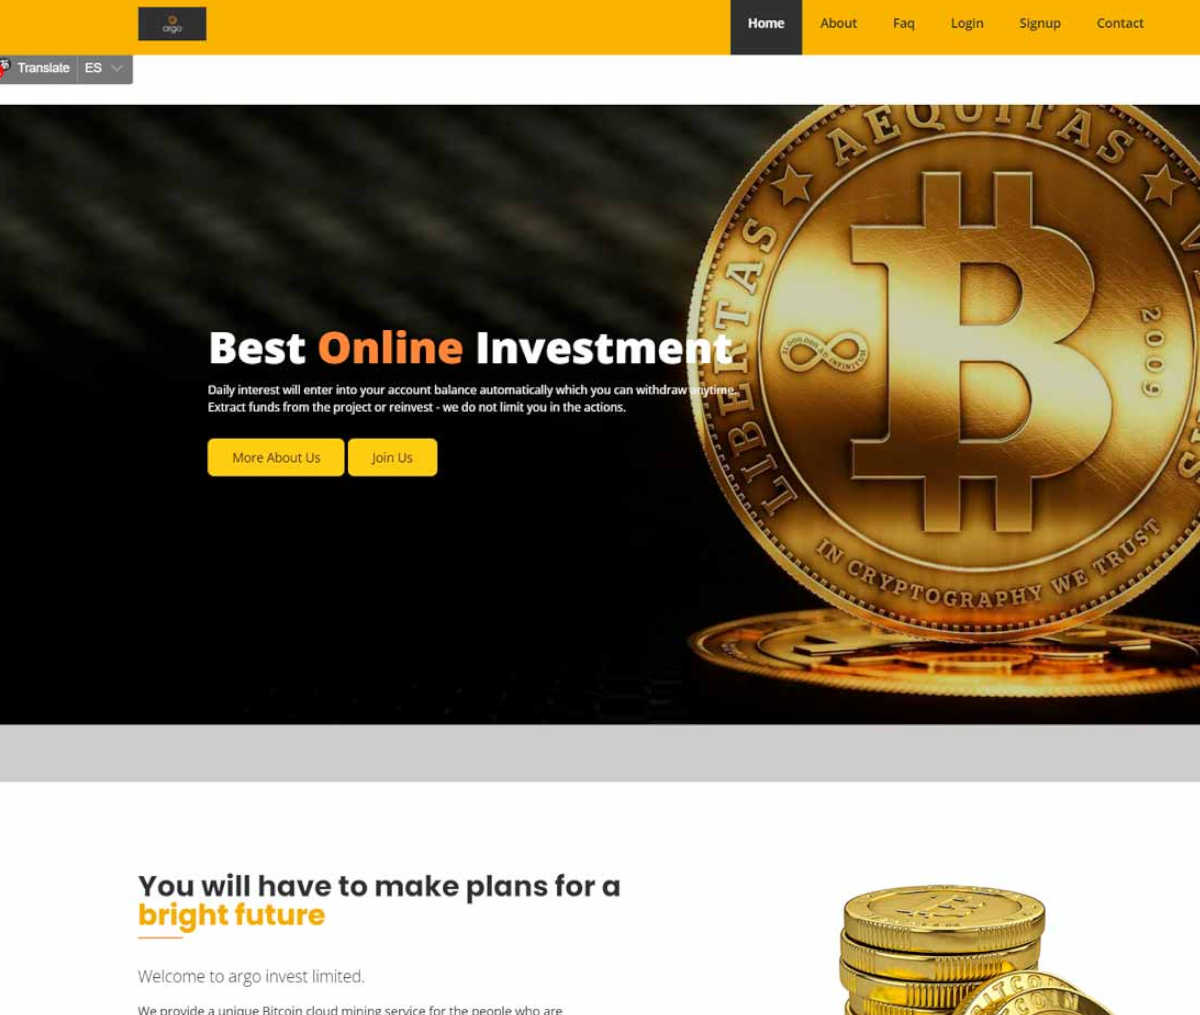 Página web de Argo Invest